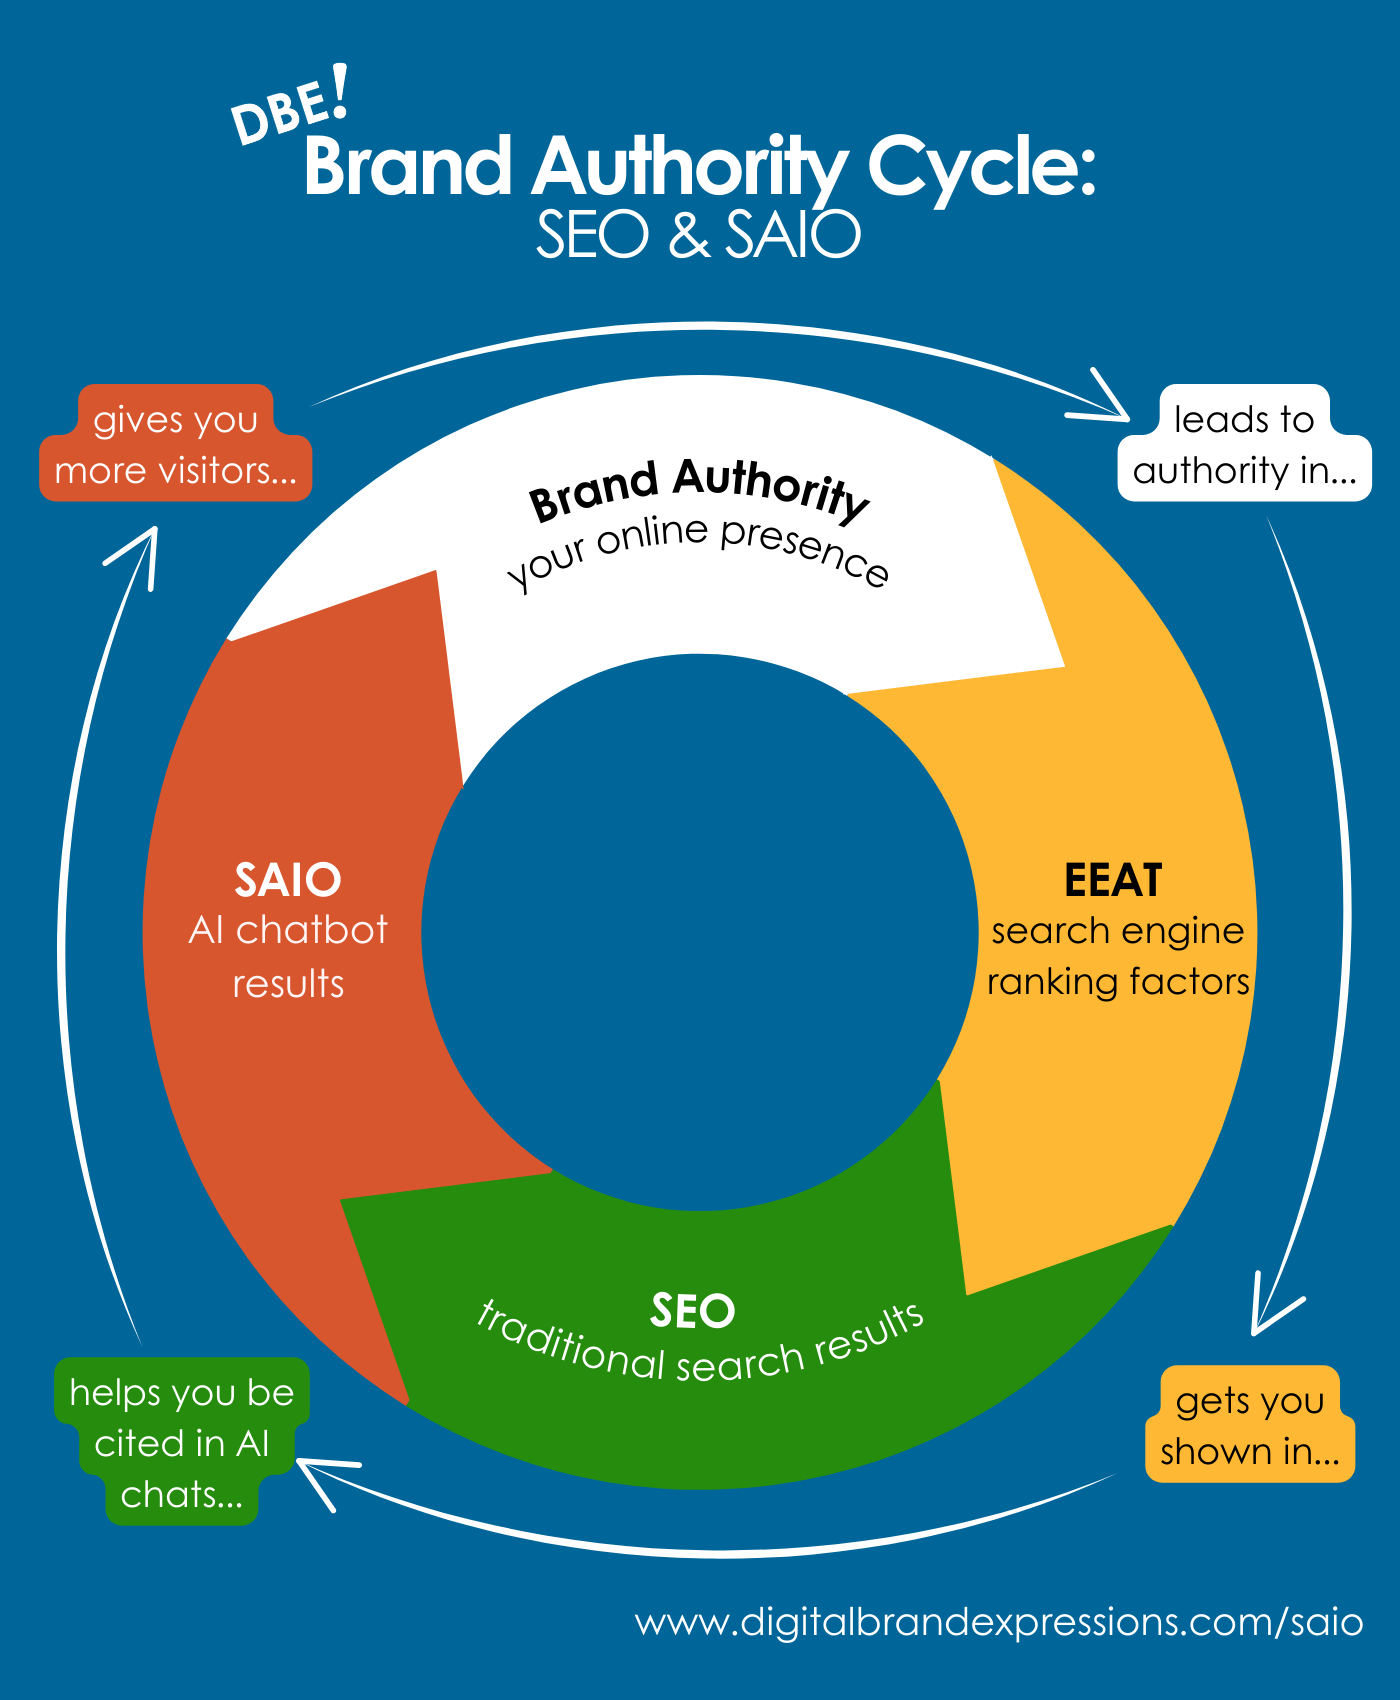 Brand Authority Cycle: Brand Authority > EEAT > SEO > SAIO